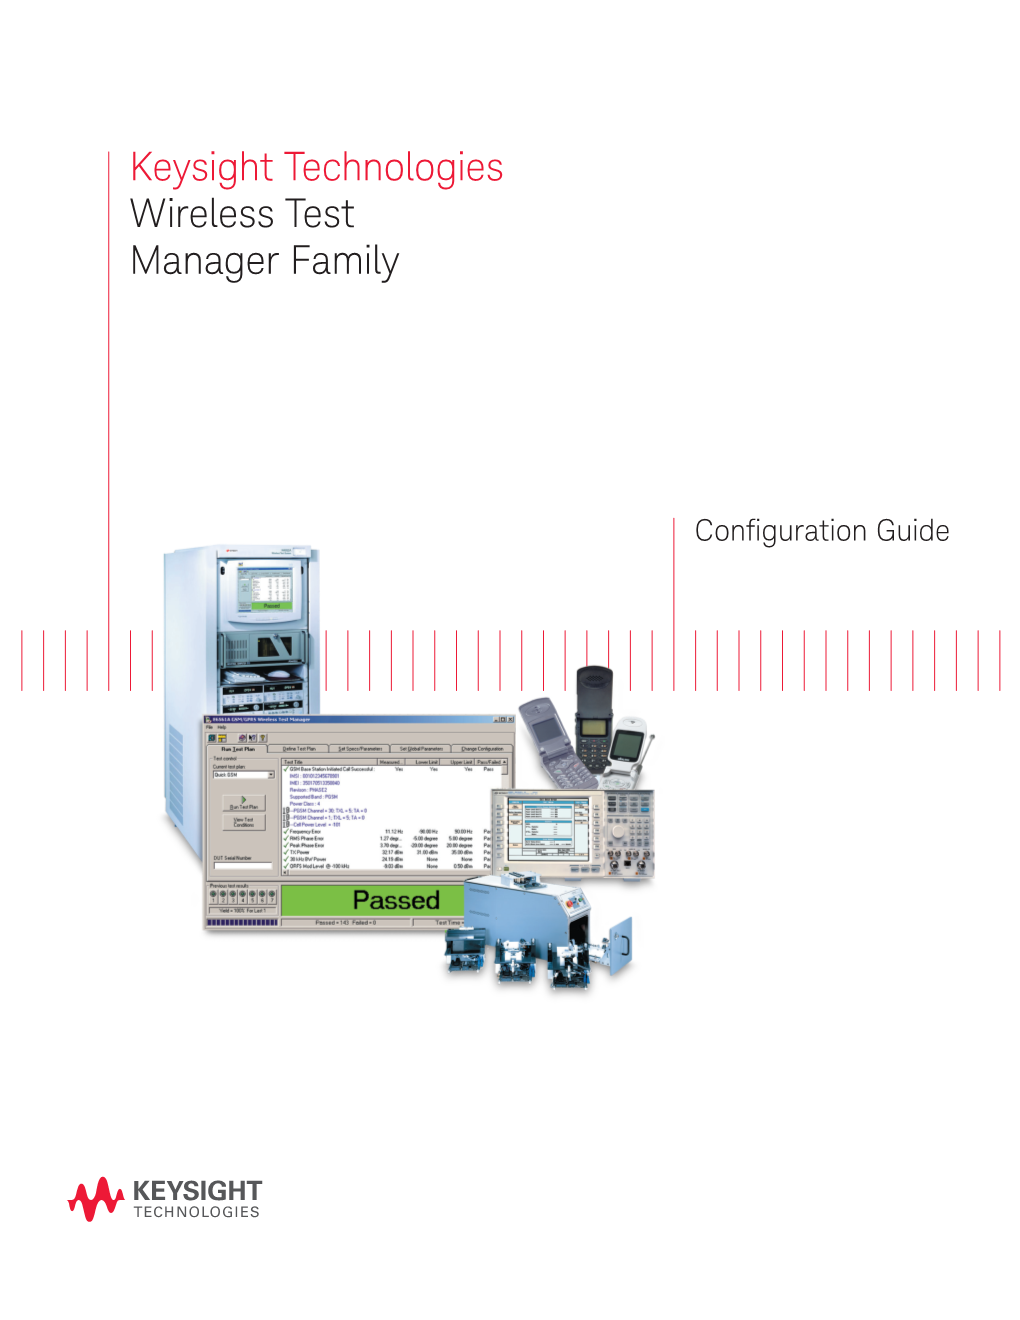 Keysight Technologies Wireless Test Manager Family